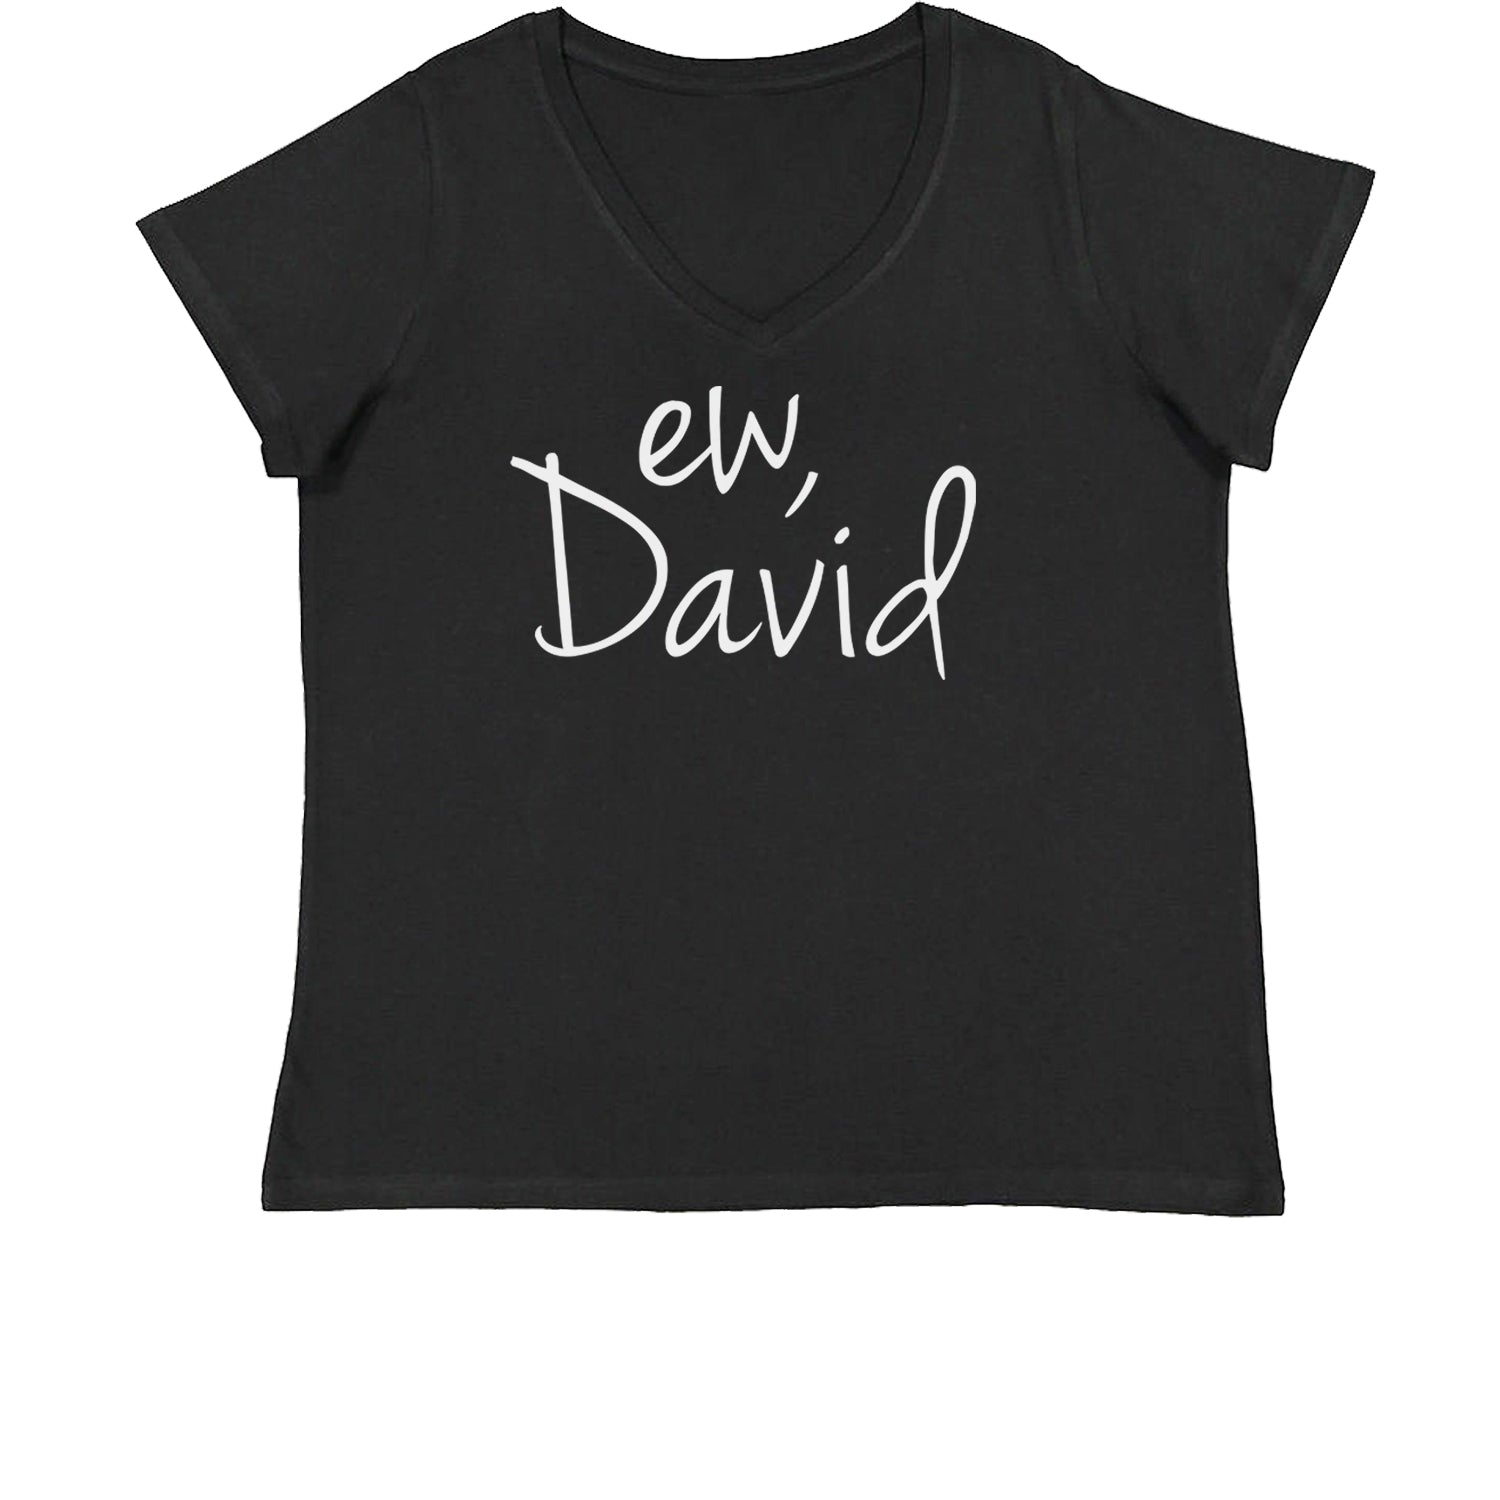 Ew, David Funny Creek TV Show Womens Plus Size V-Neck T-shirt alexis, bit, david, eugene, levy, little, nonchalance, schitt by Expression Tees